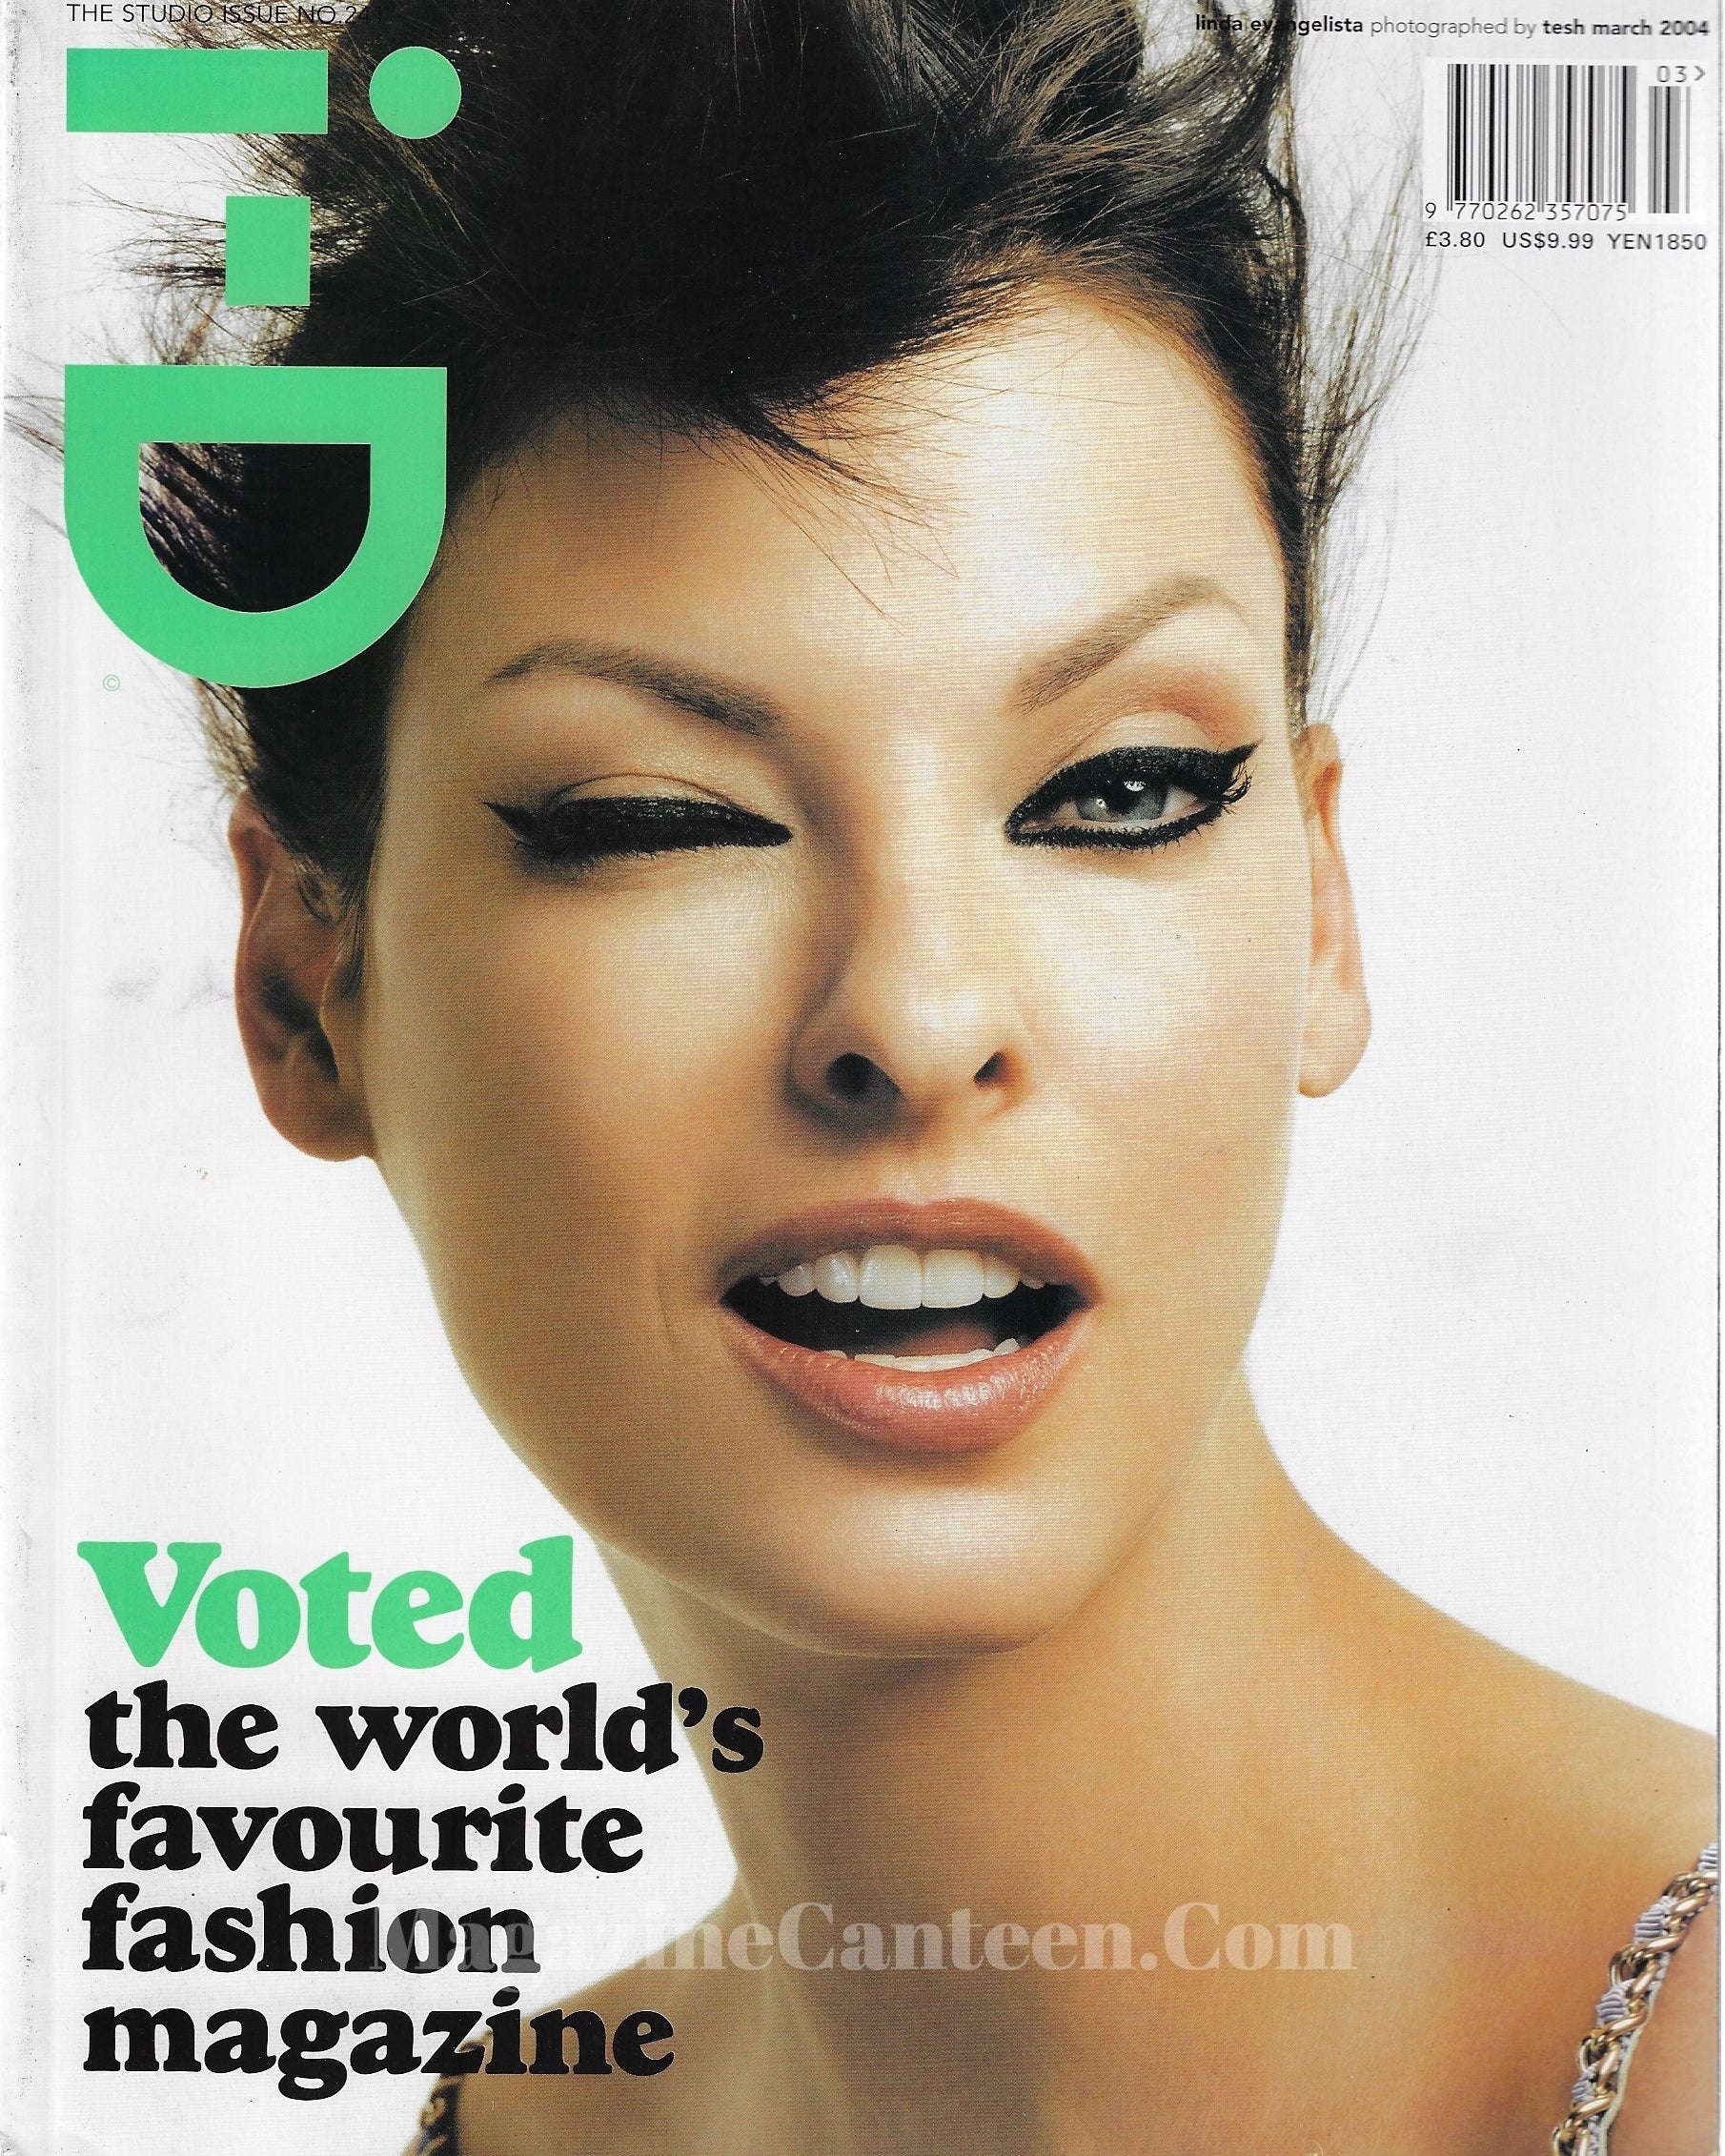 I-D Magazine 241 - Linda Evangelista 2004